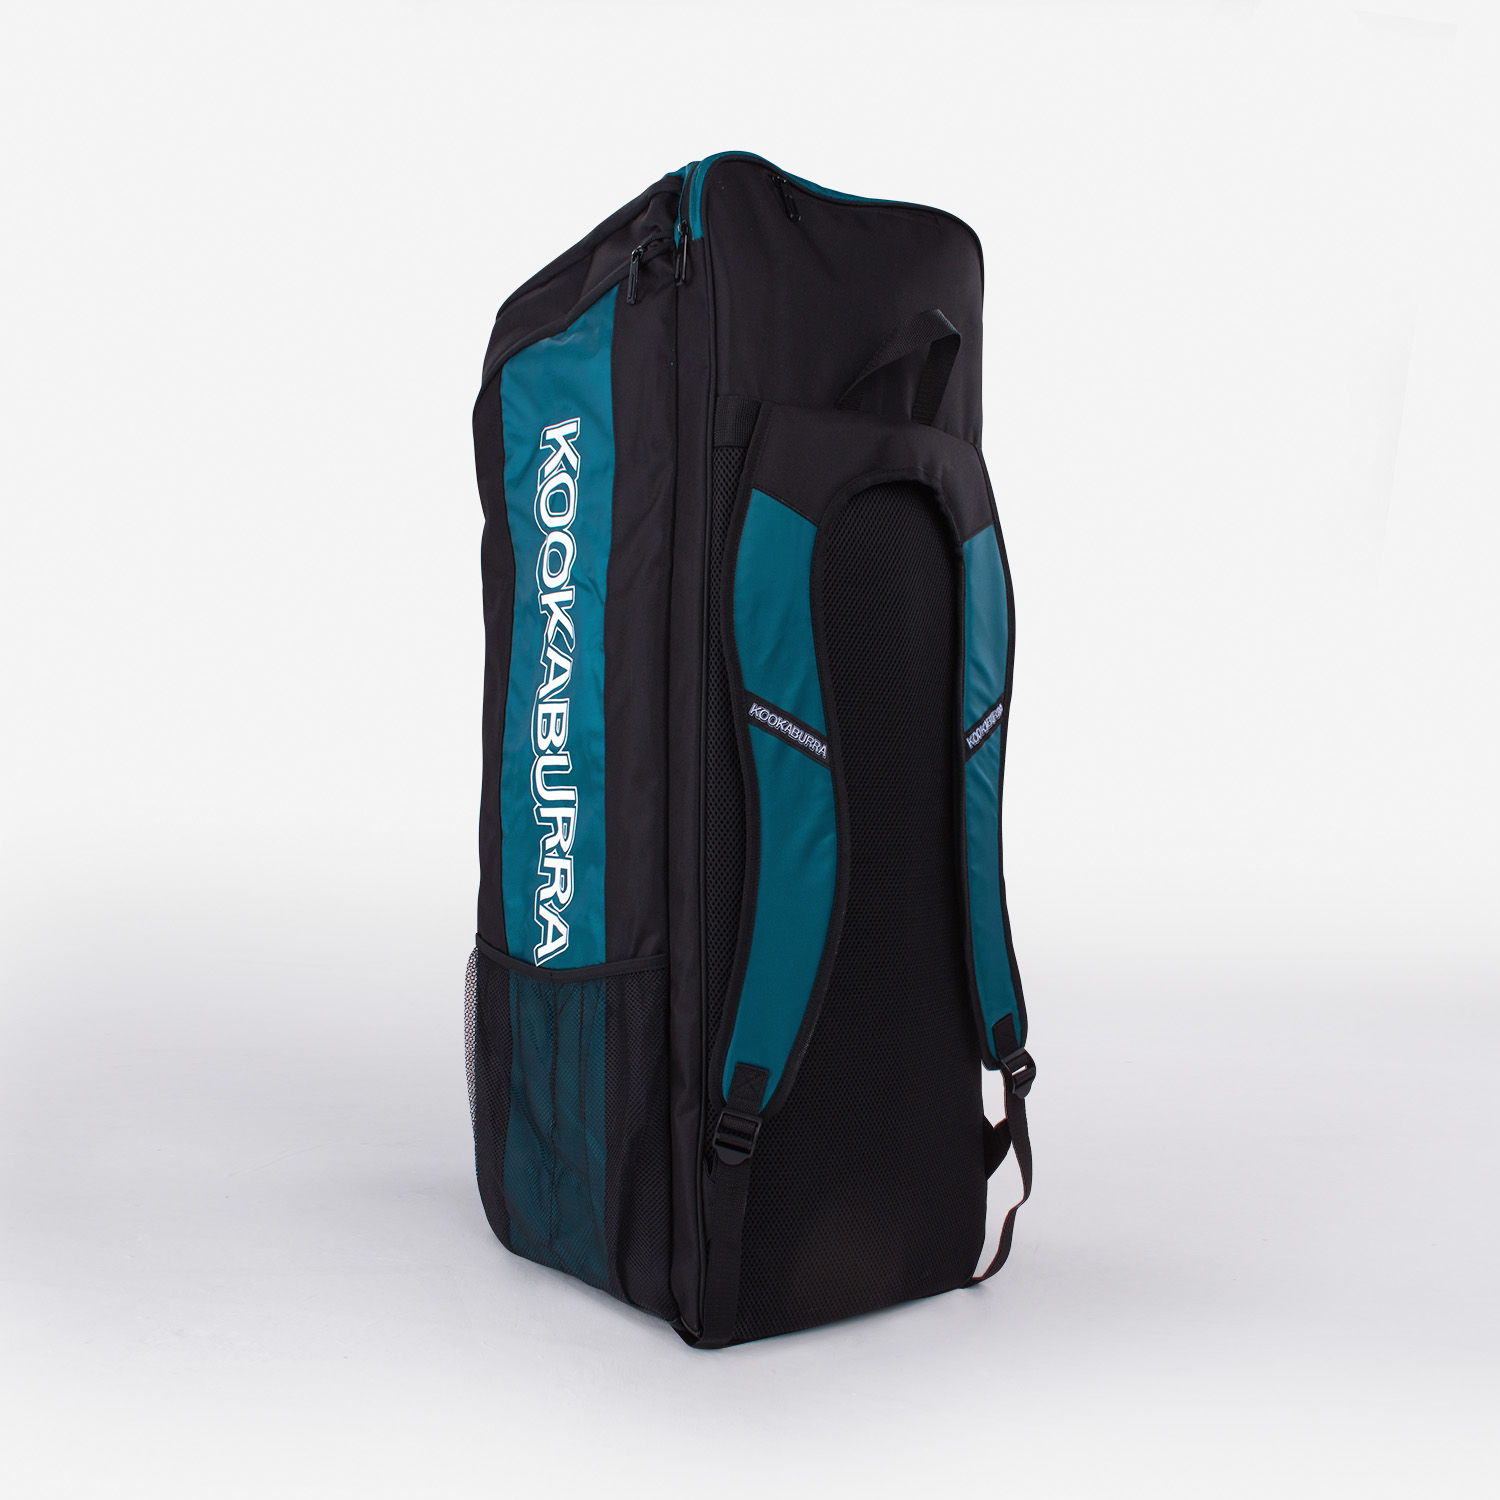 Pro 2000 Cricket Duffle Bag Black & Green| Kookaburra Sport UK